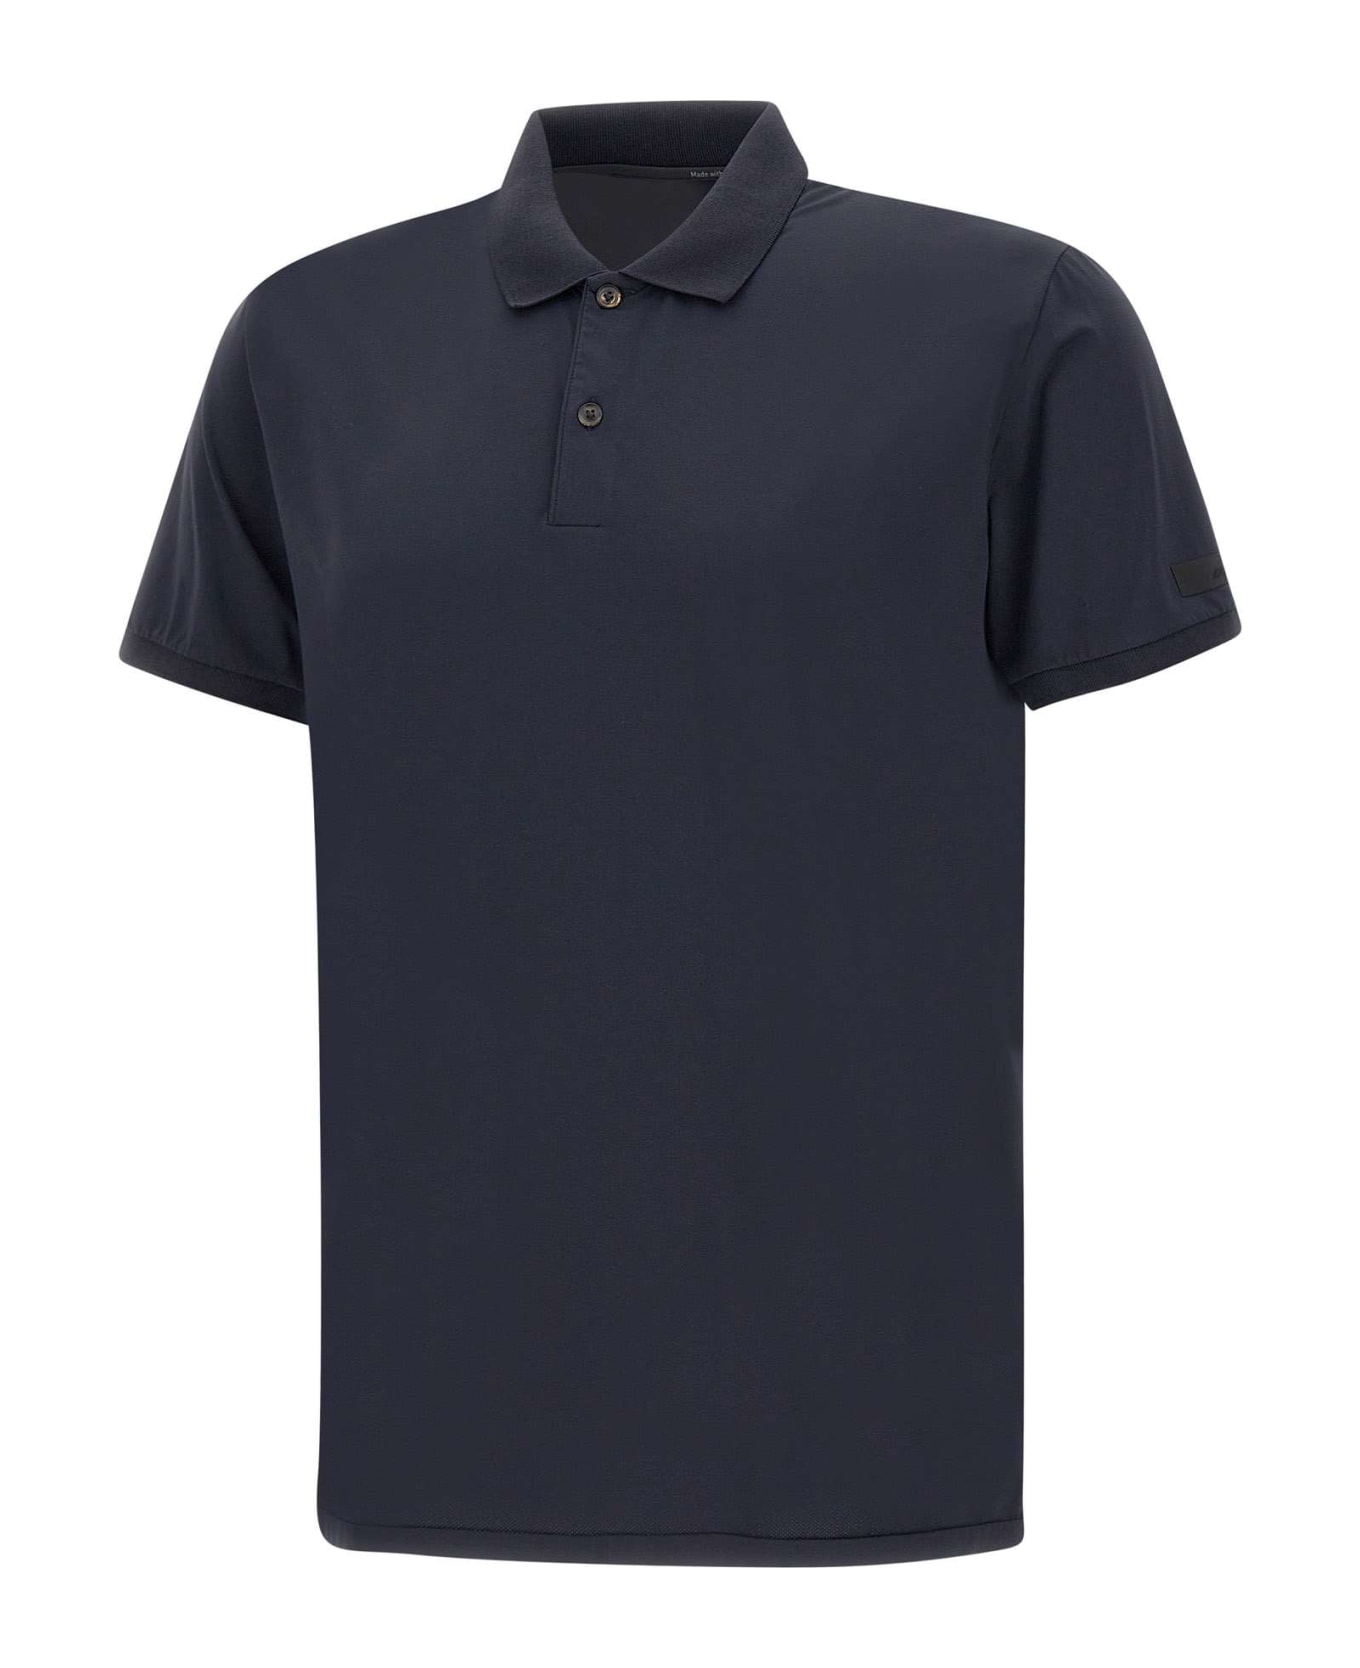 RRD - Roberto Ricci Design 'gdy' Cotton Oxford Polo Shirt - Blue Black ポロシャツ